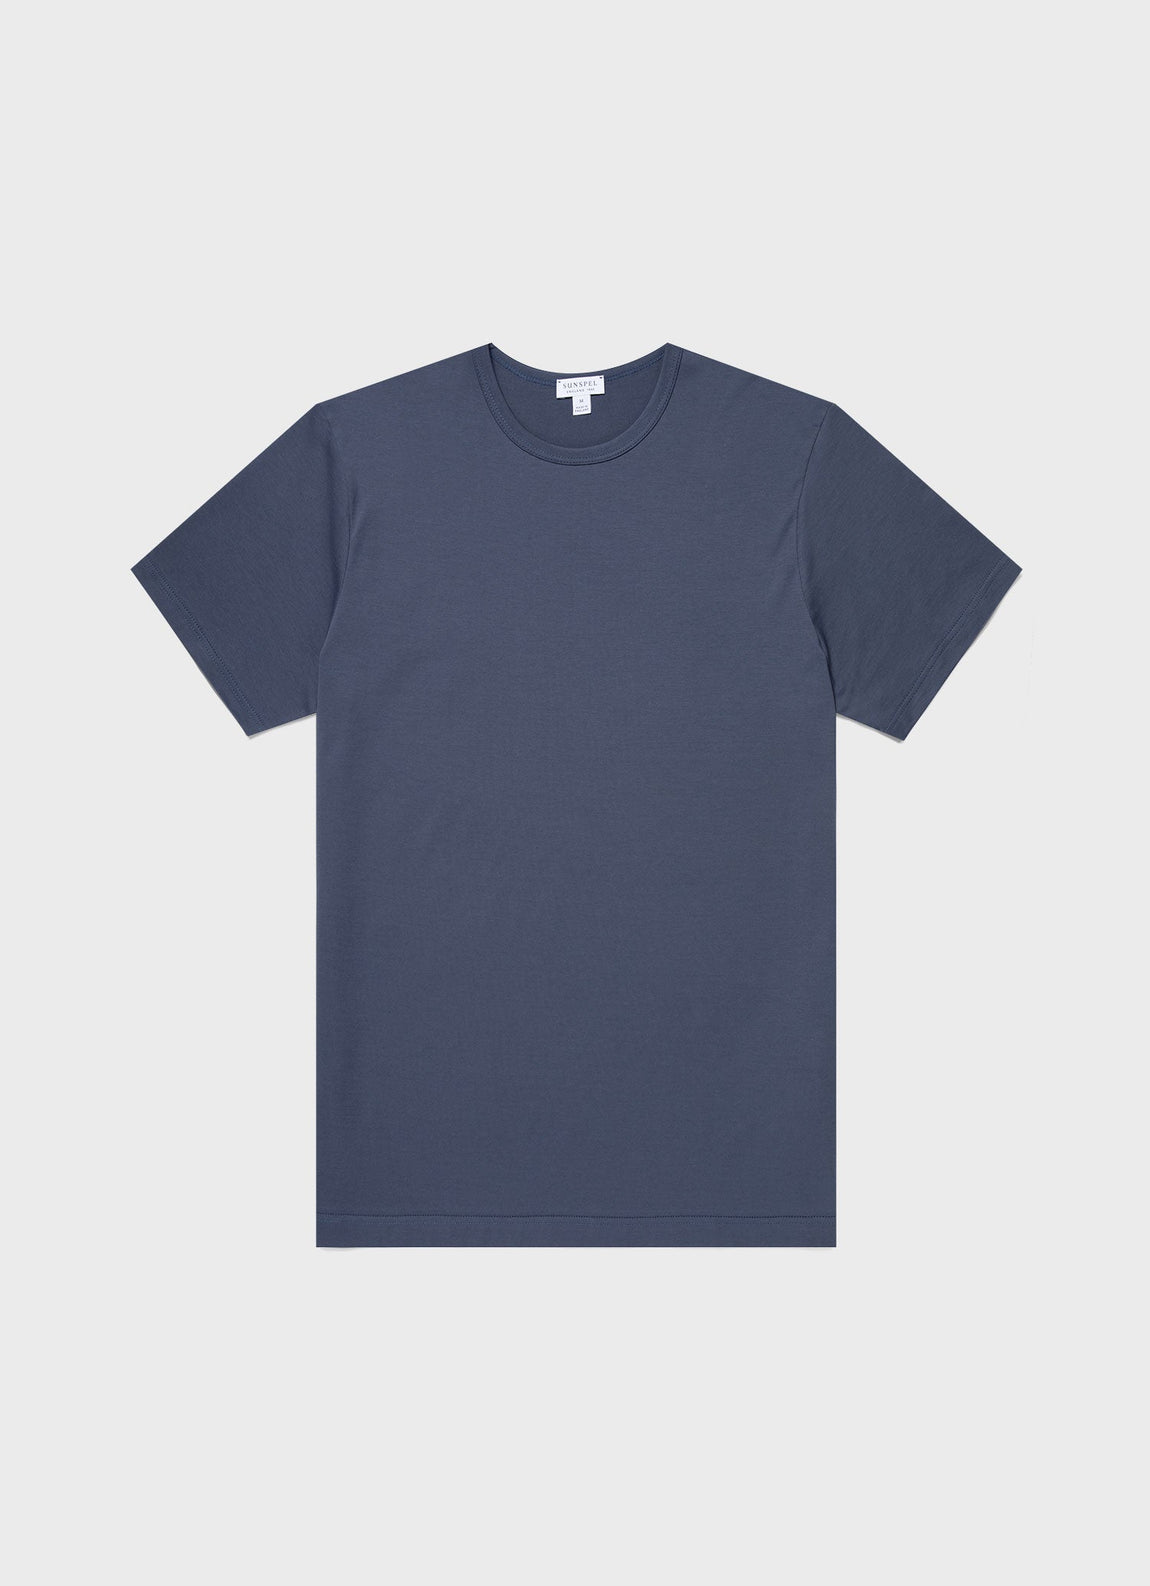 Men's Classic T-shirt in Slate Blue